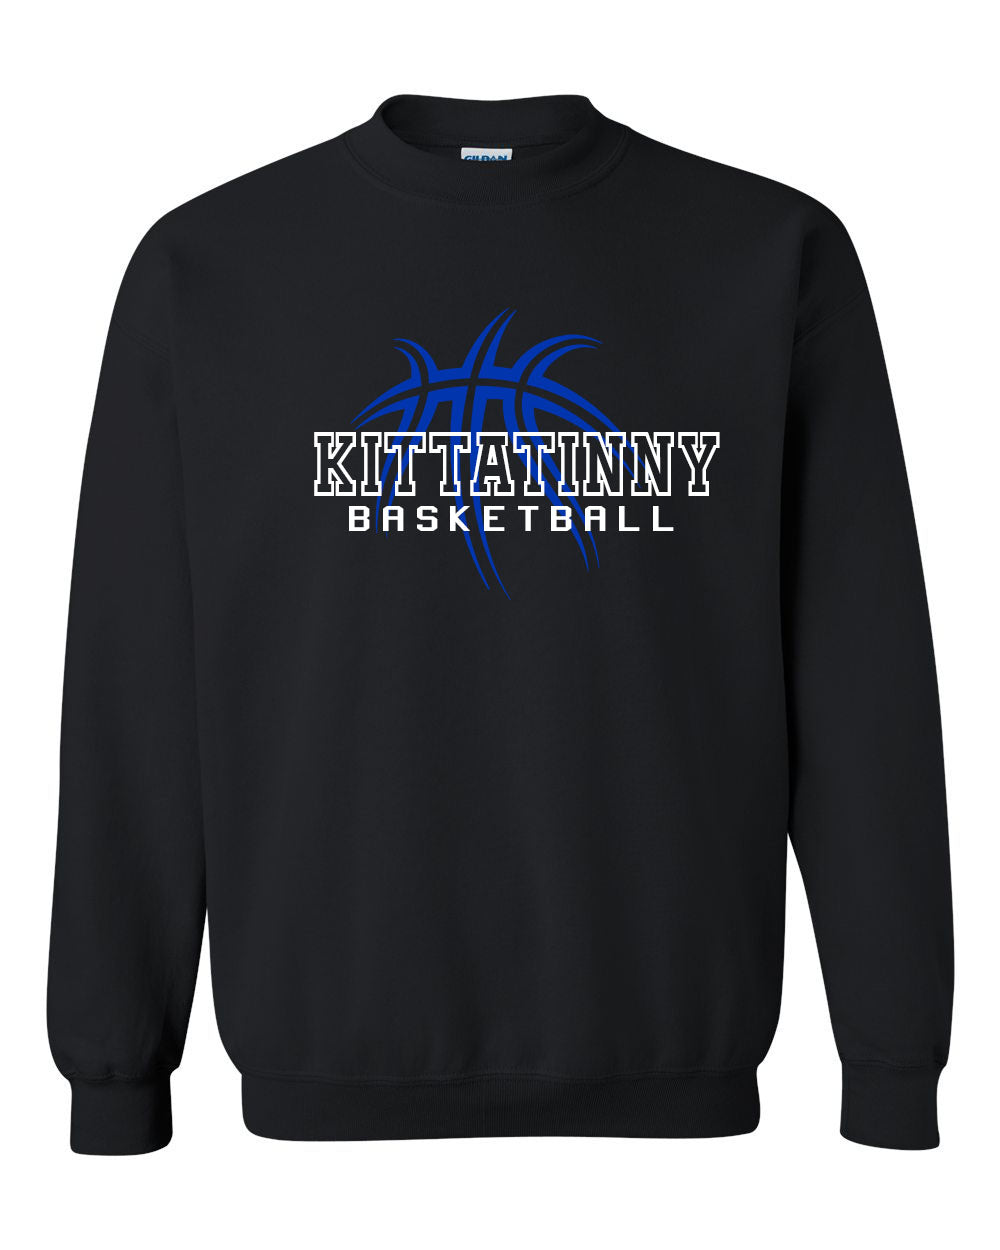 Kittatinny Basketball Design 4 non hooded sweatshirt